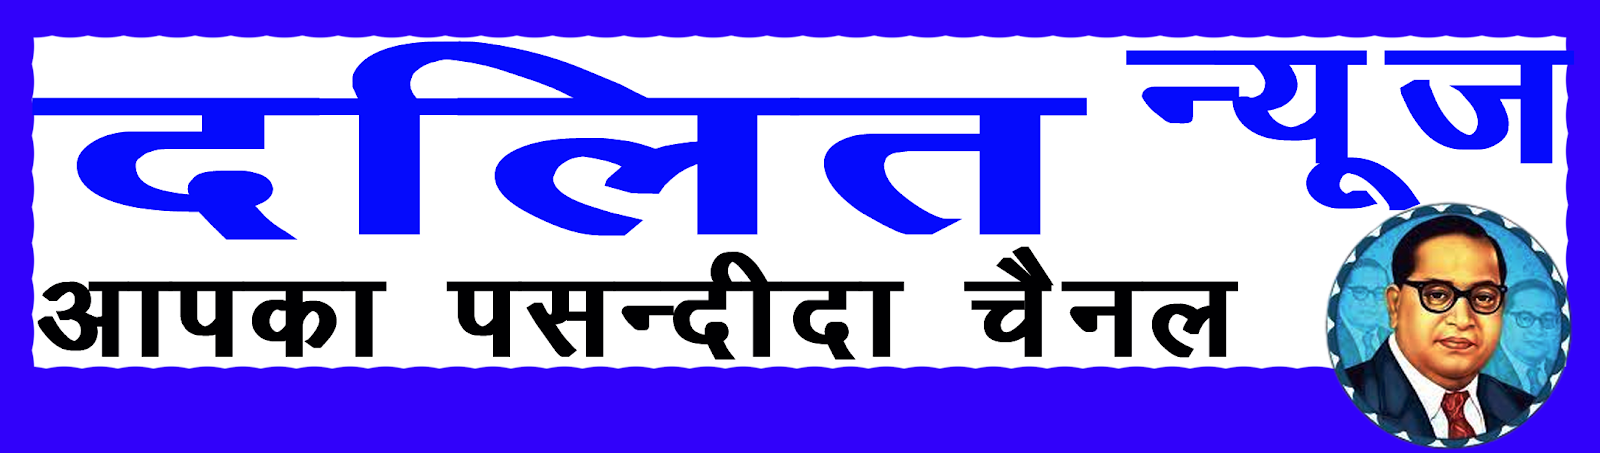 Dalit News 18 Hindi News Channel दलित न्यूज़ 18